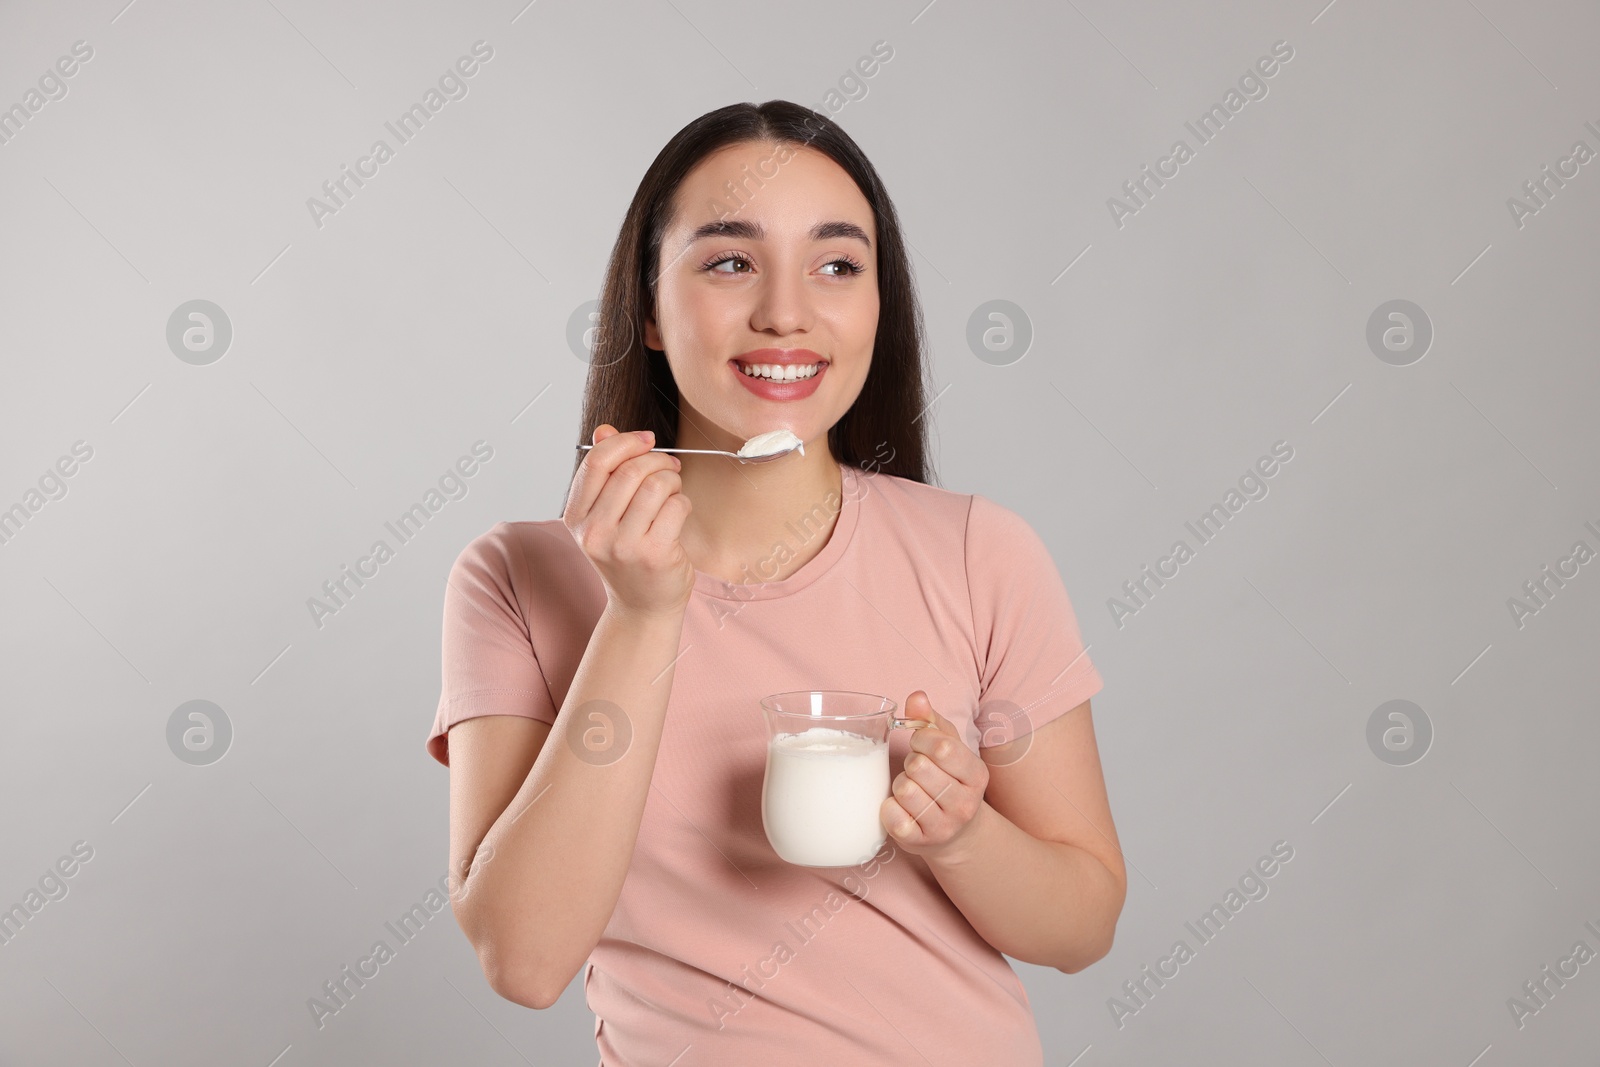 Photo of Happy woman eating tasty yogurt on grey background